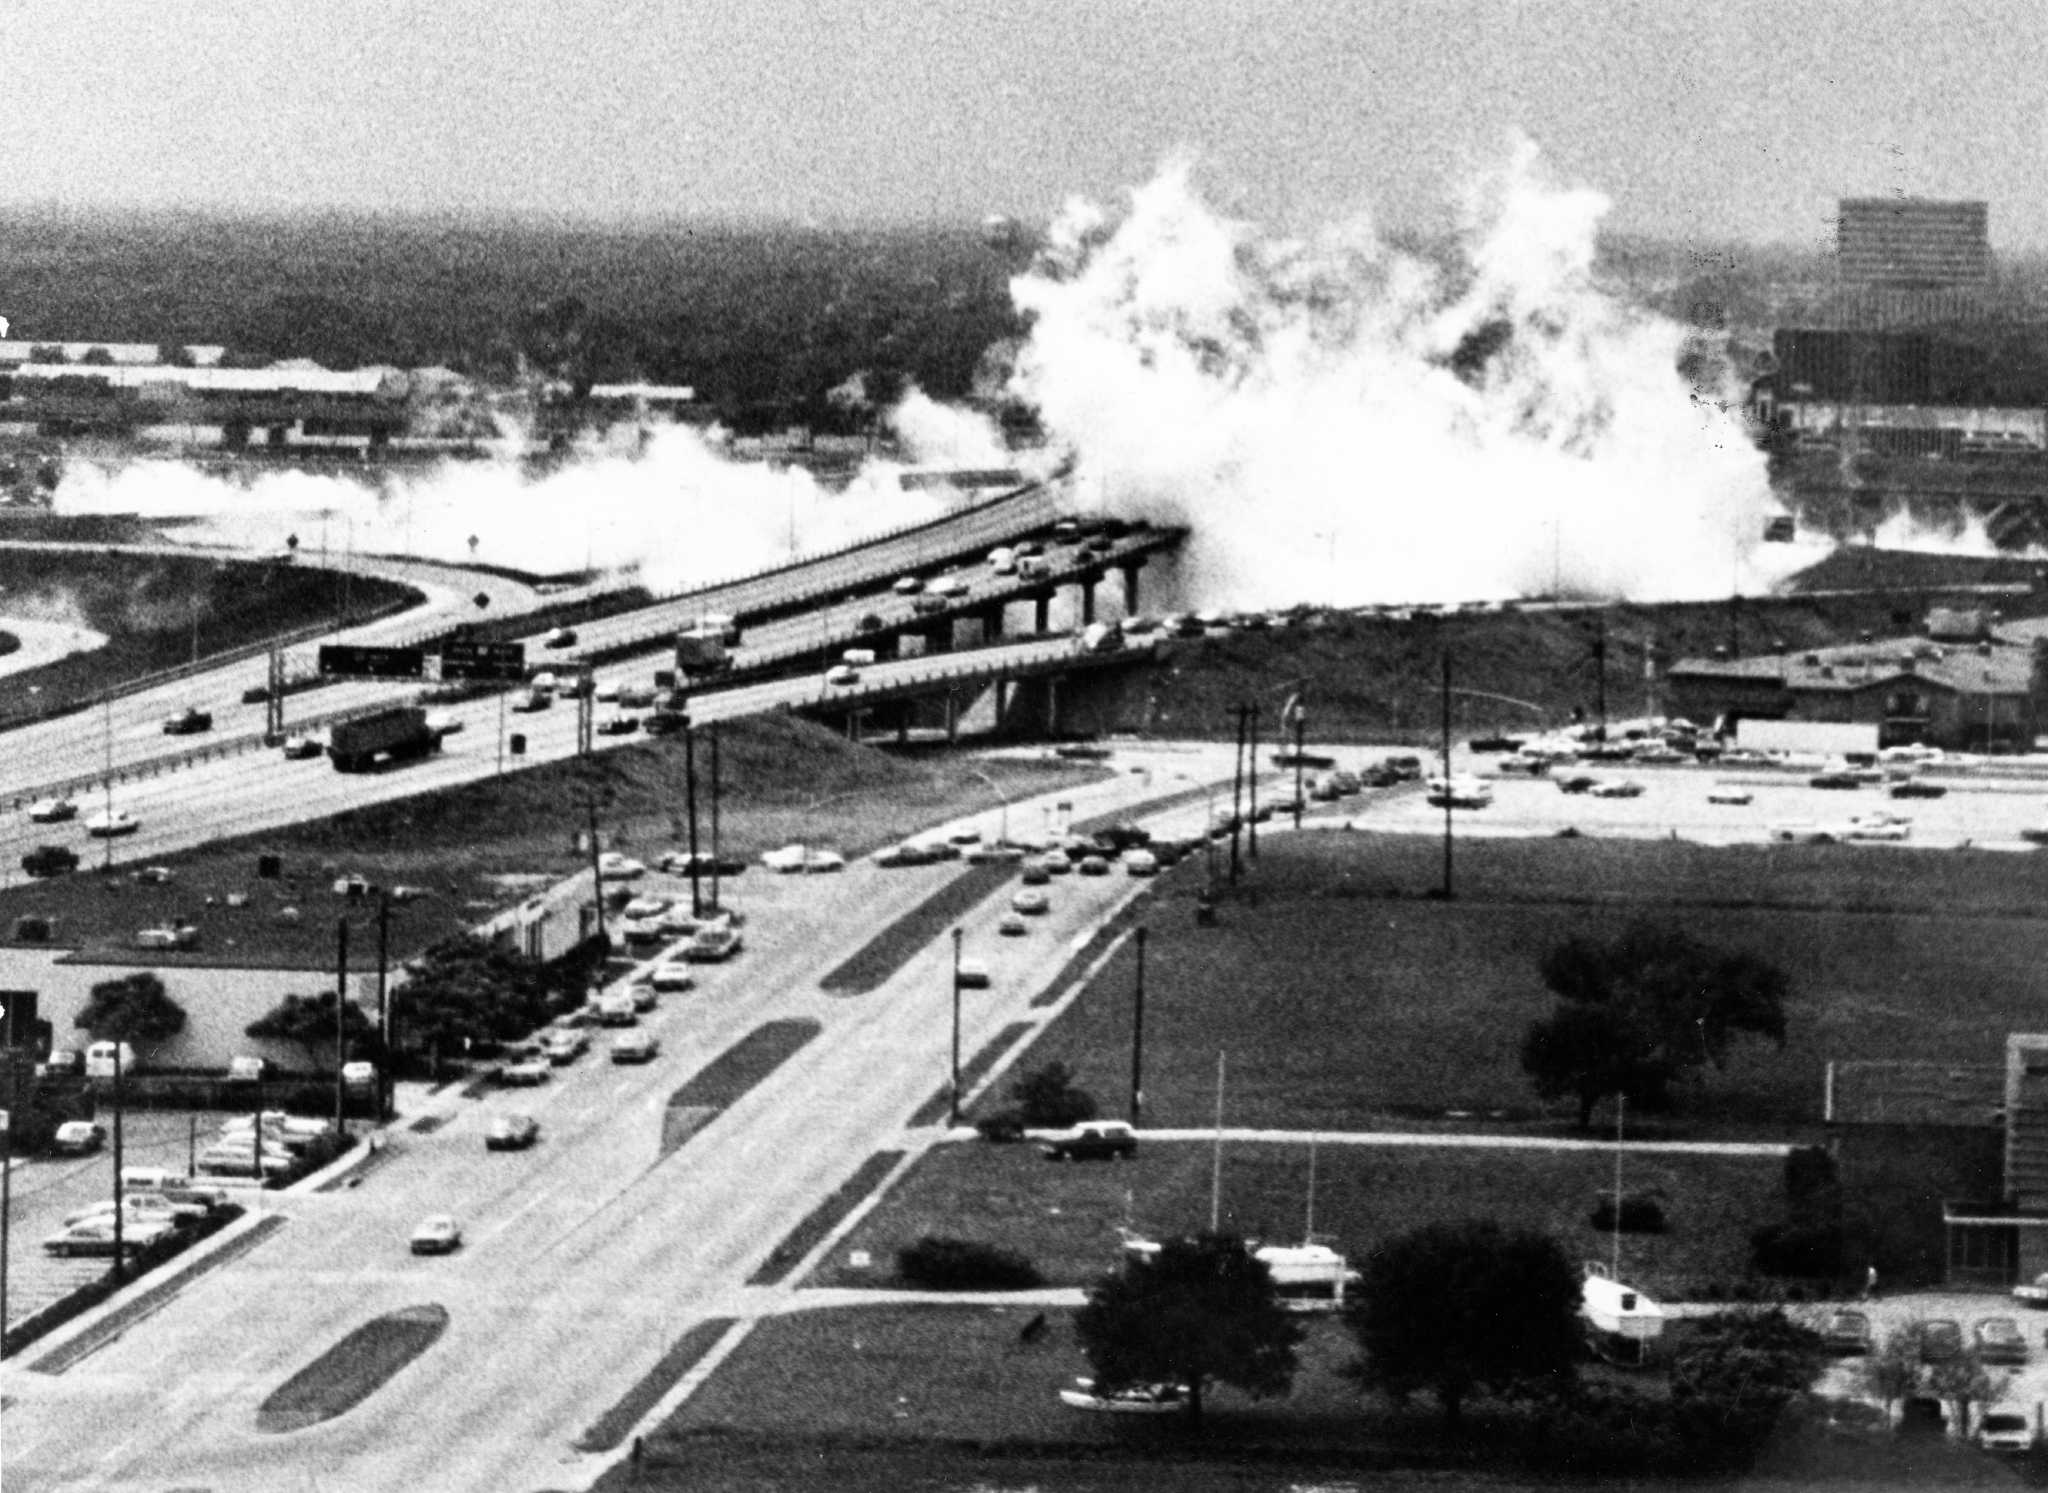 On May 11, 1976, an ammonia truck disaster killed several Houstonians, led to major ...2048 x 1493